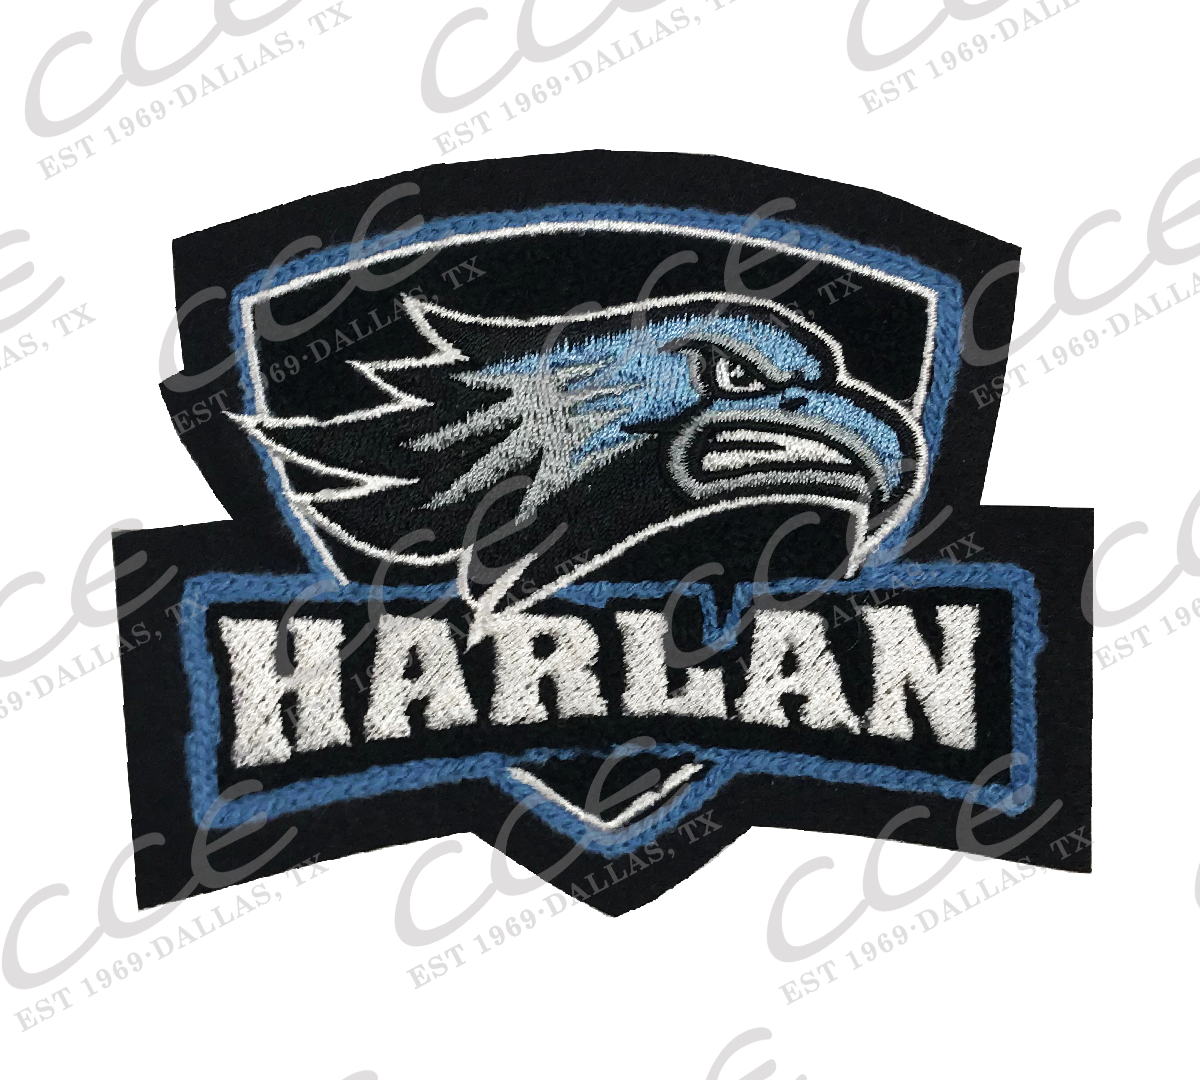 Harlan HS Hawk Head Mascot